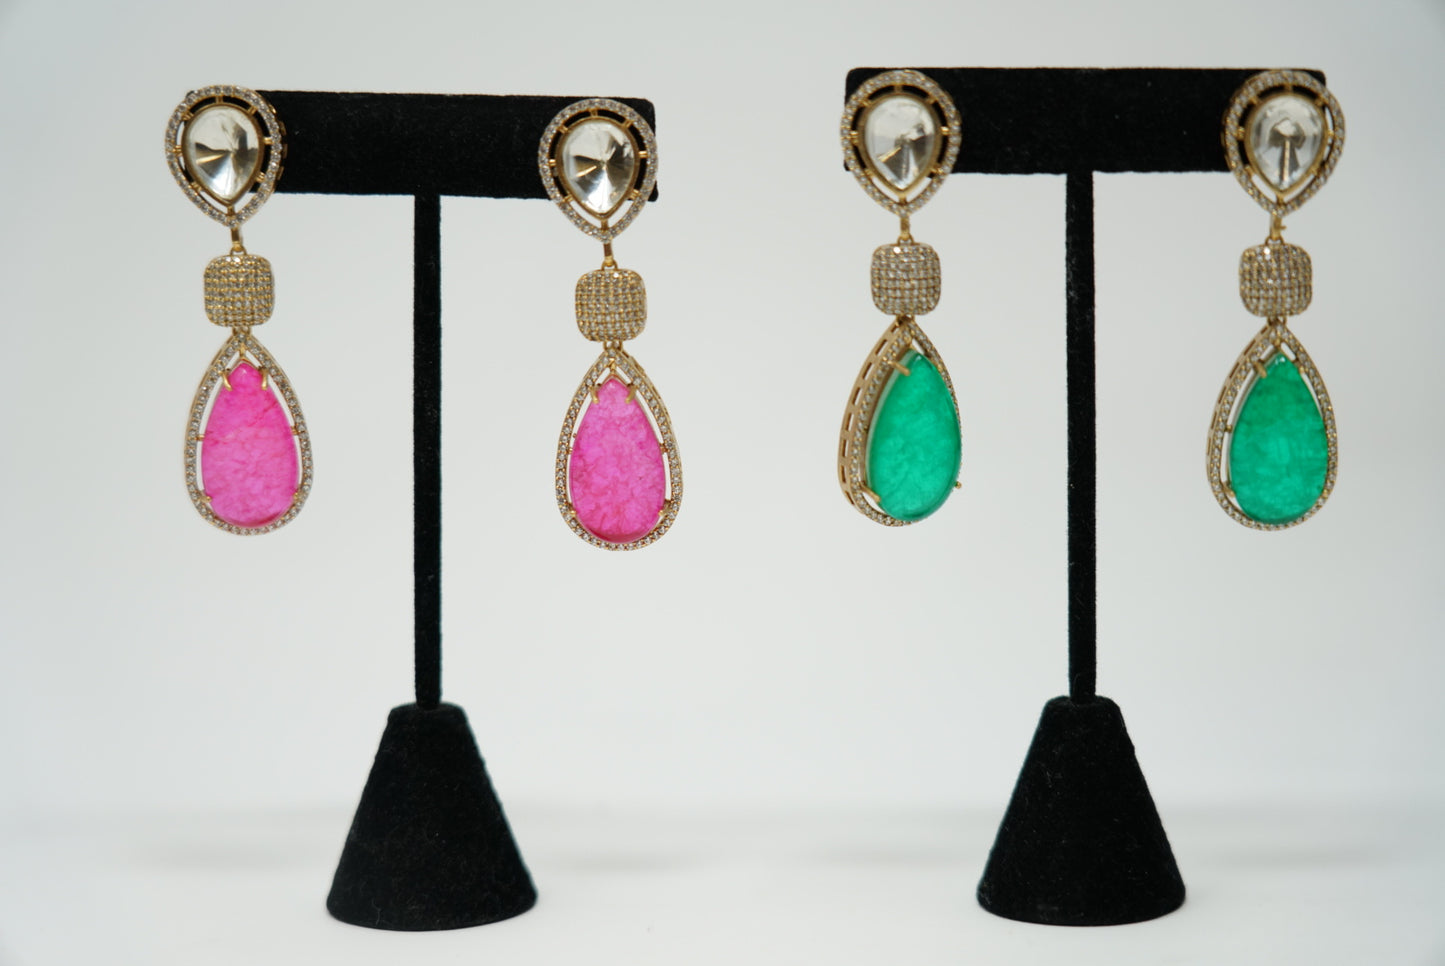 Premium Gold & Pink Toned Crystal Teardrop Shaped Earrings